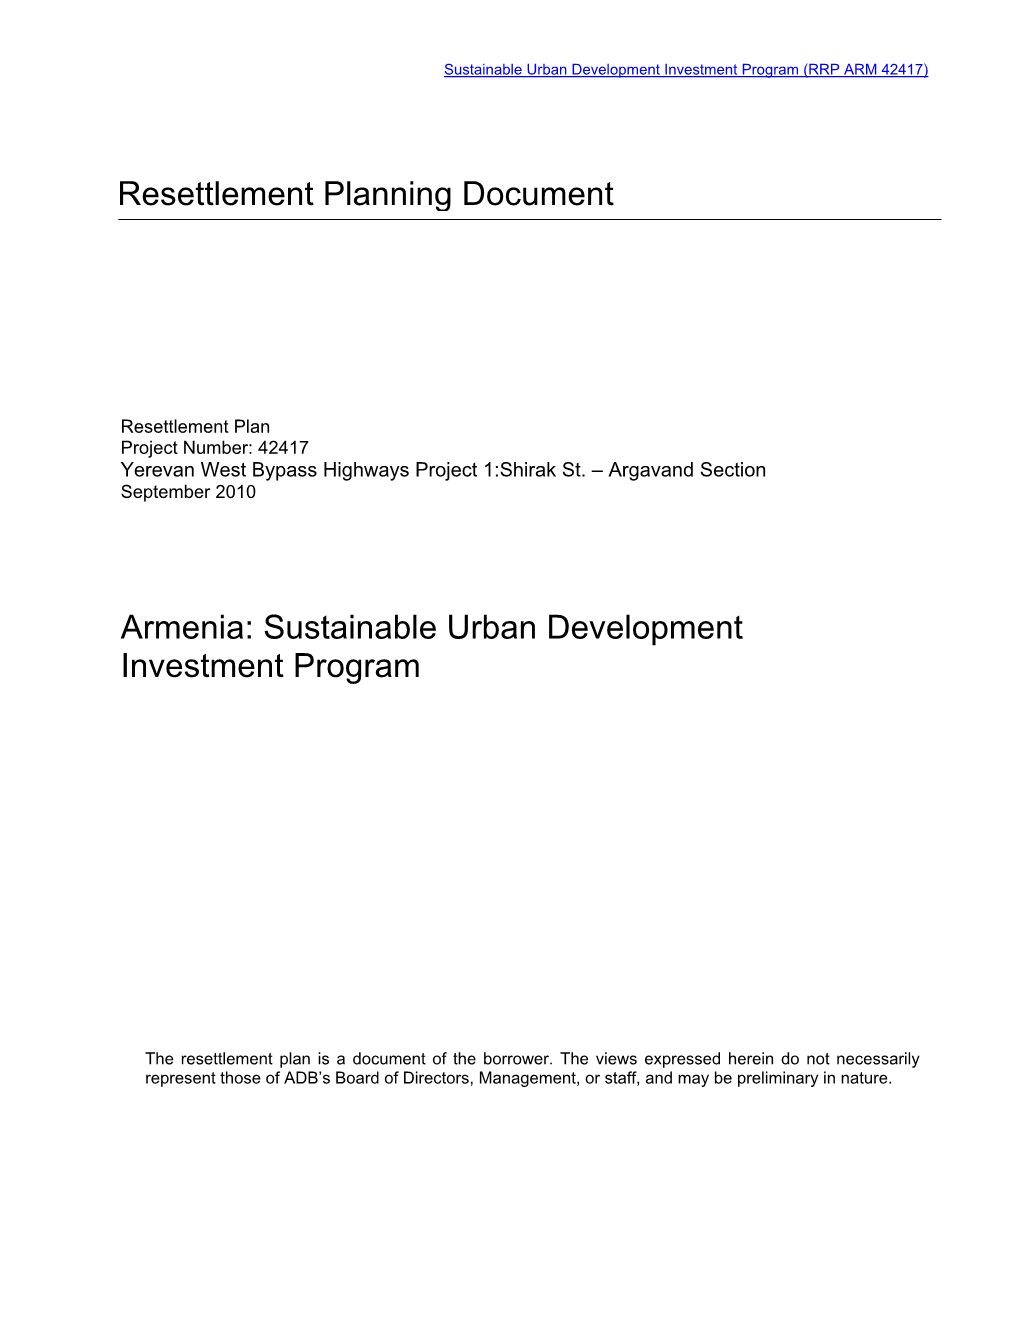 Armenia: Sustainable Urban Development Investment Program